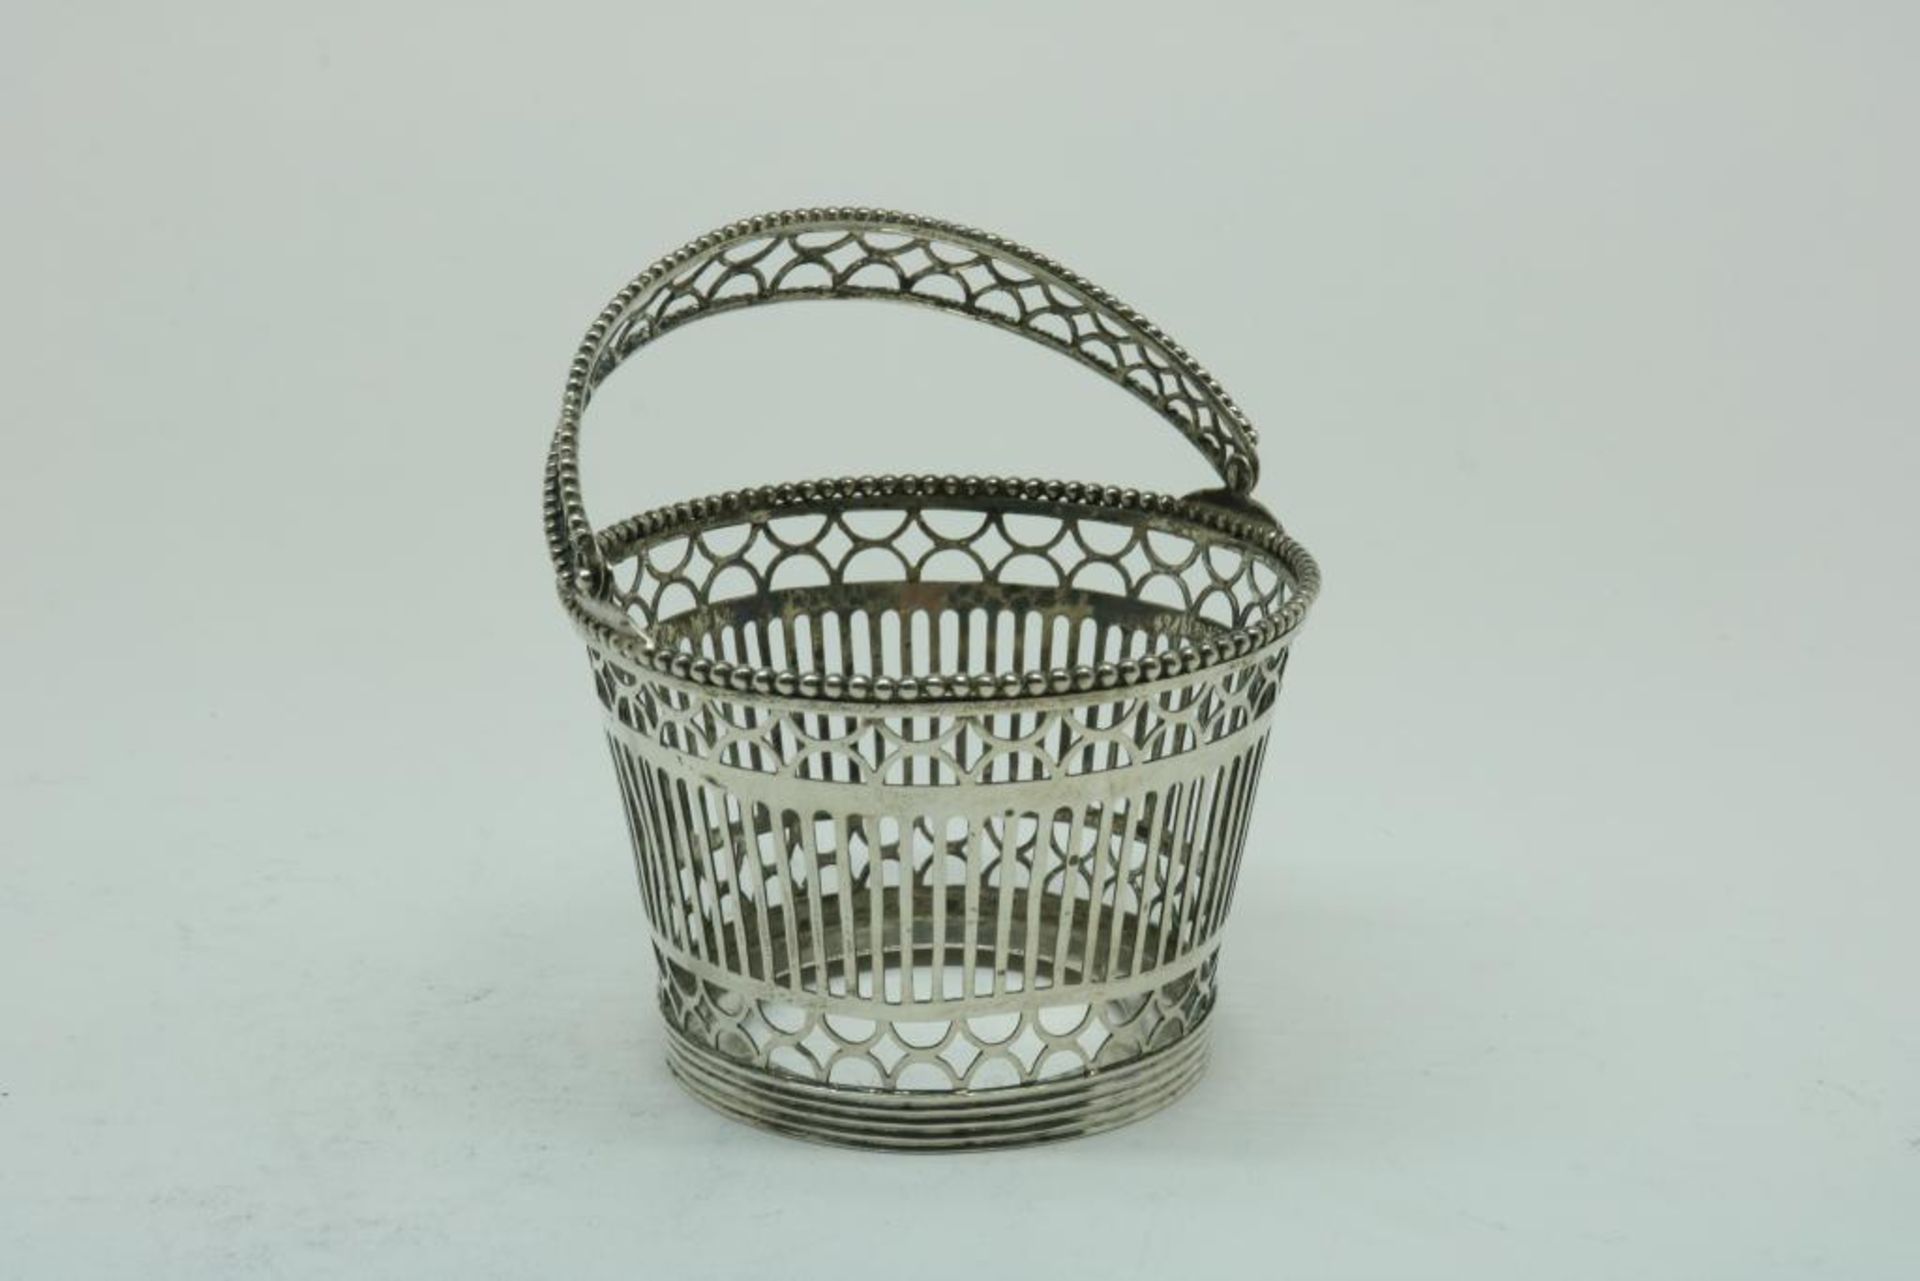 A silver ajour basket with blue glass liner, mm Gebr. Seton, Schoonhoven, dl 1911, 835/000, gross w. - Bild 3 aus 3